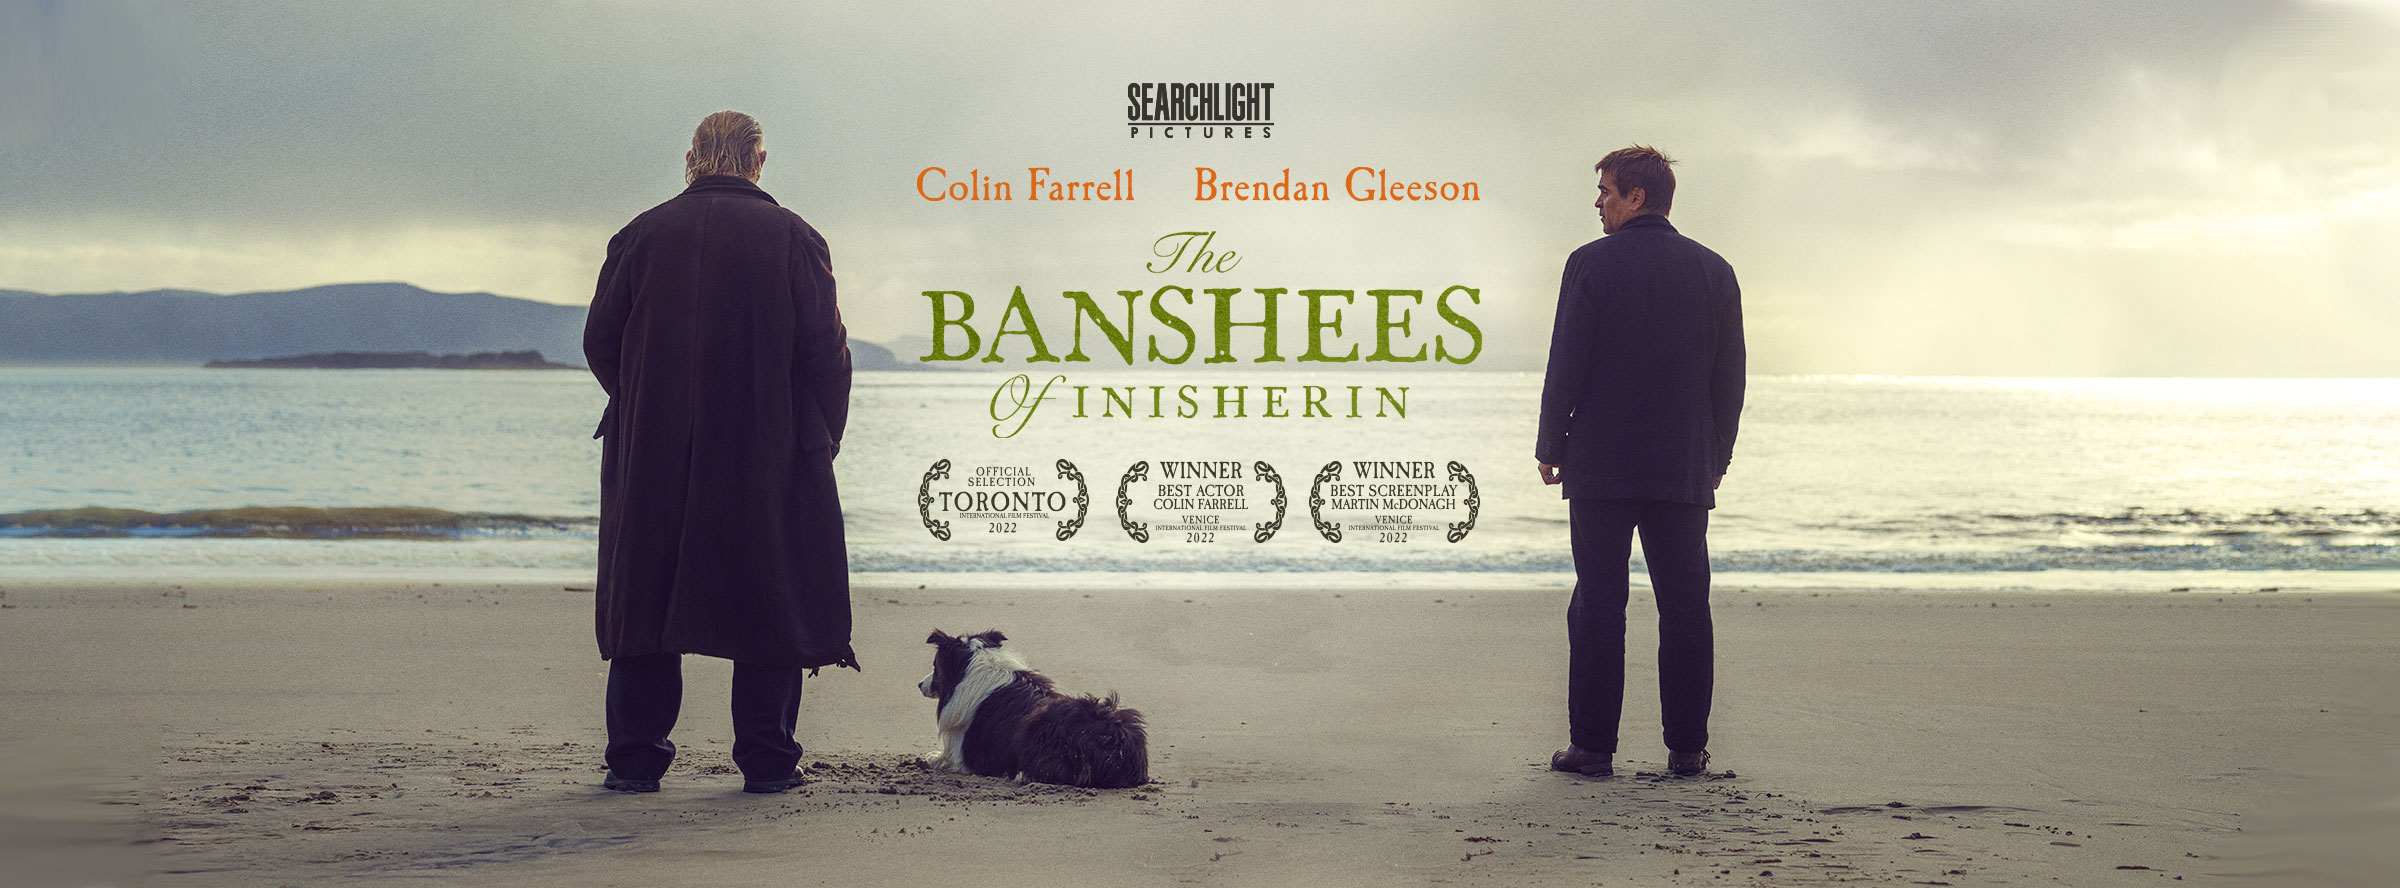 Slider Image for Banshees of Inisherin, The